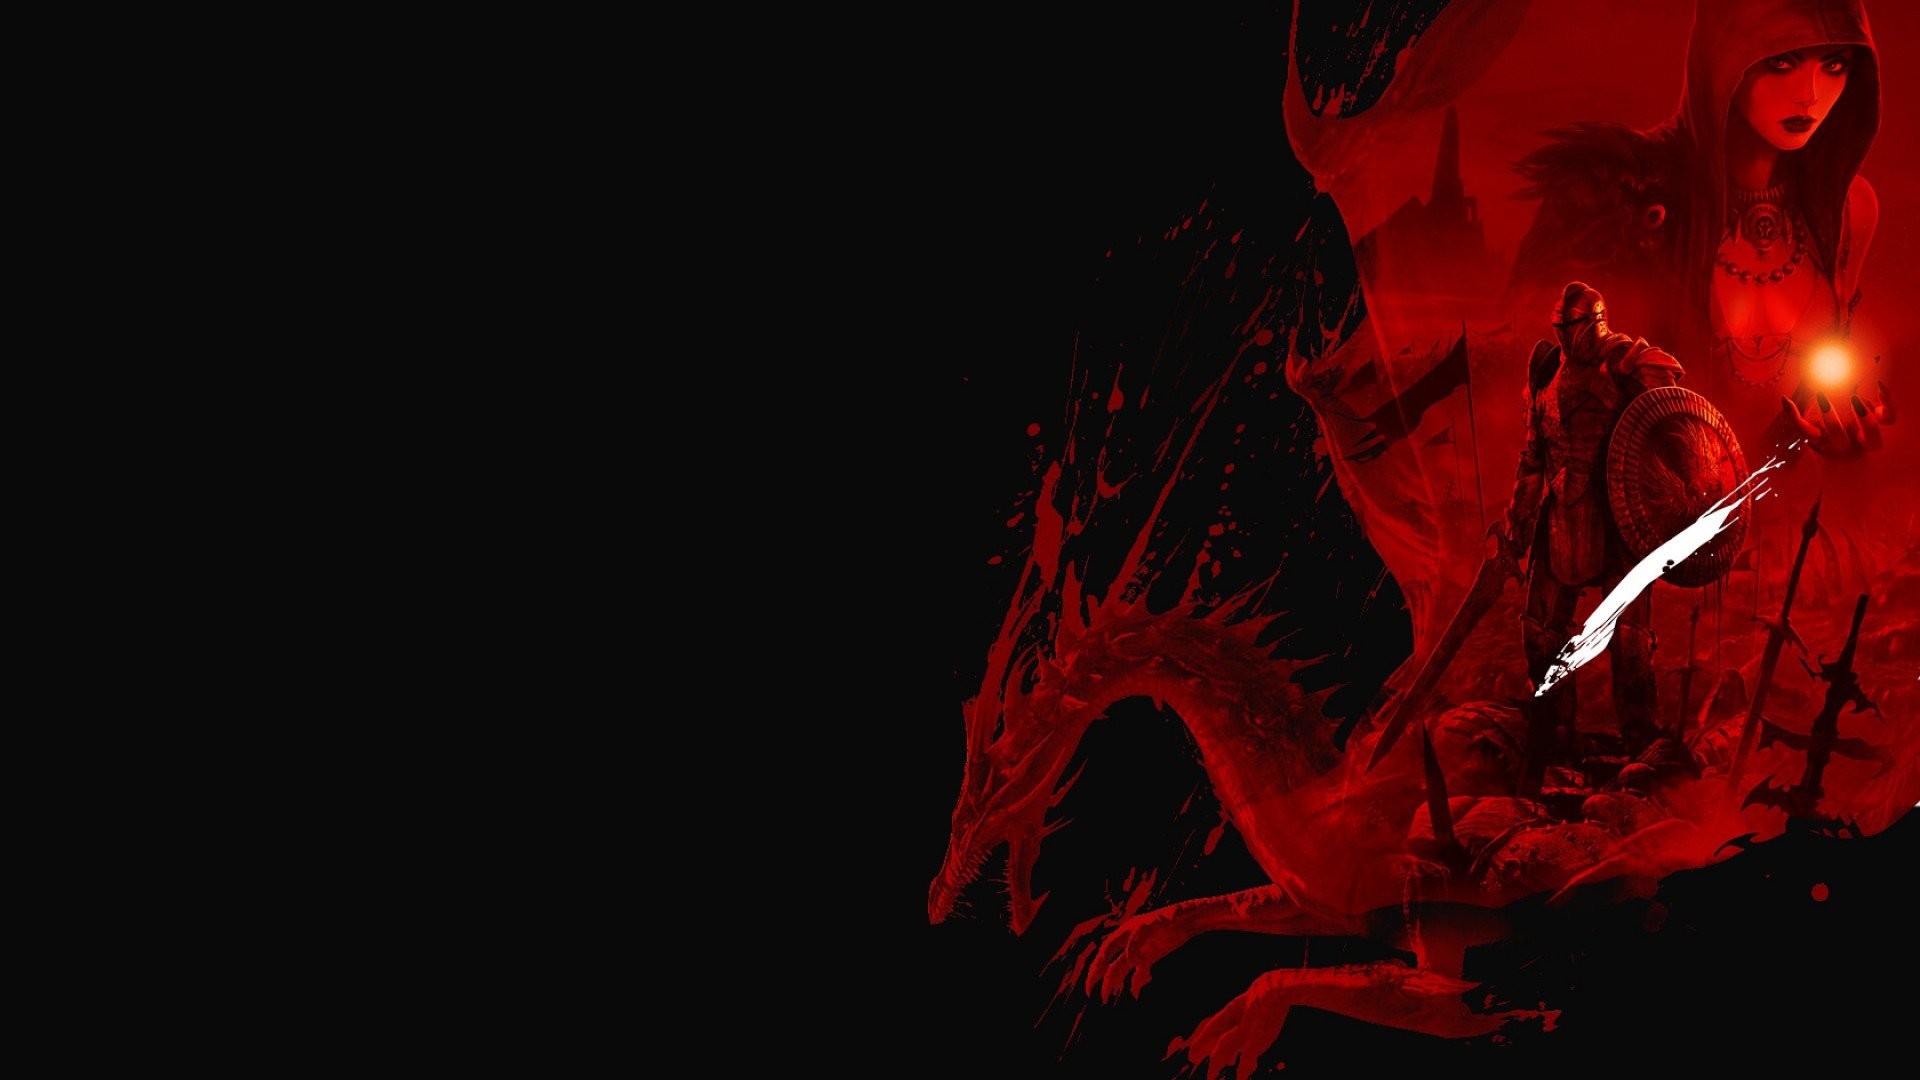 Red Dragon 550083. SHARE. TAGS: Desktop Dragon Red Black